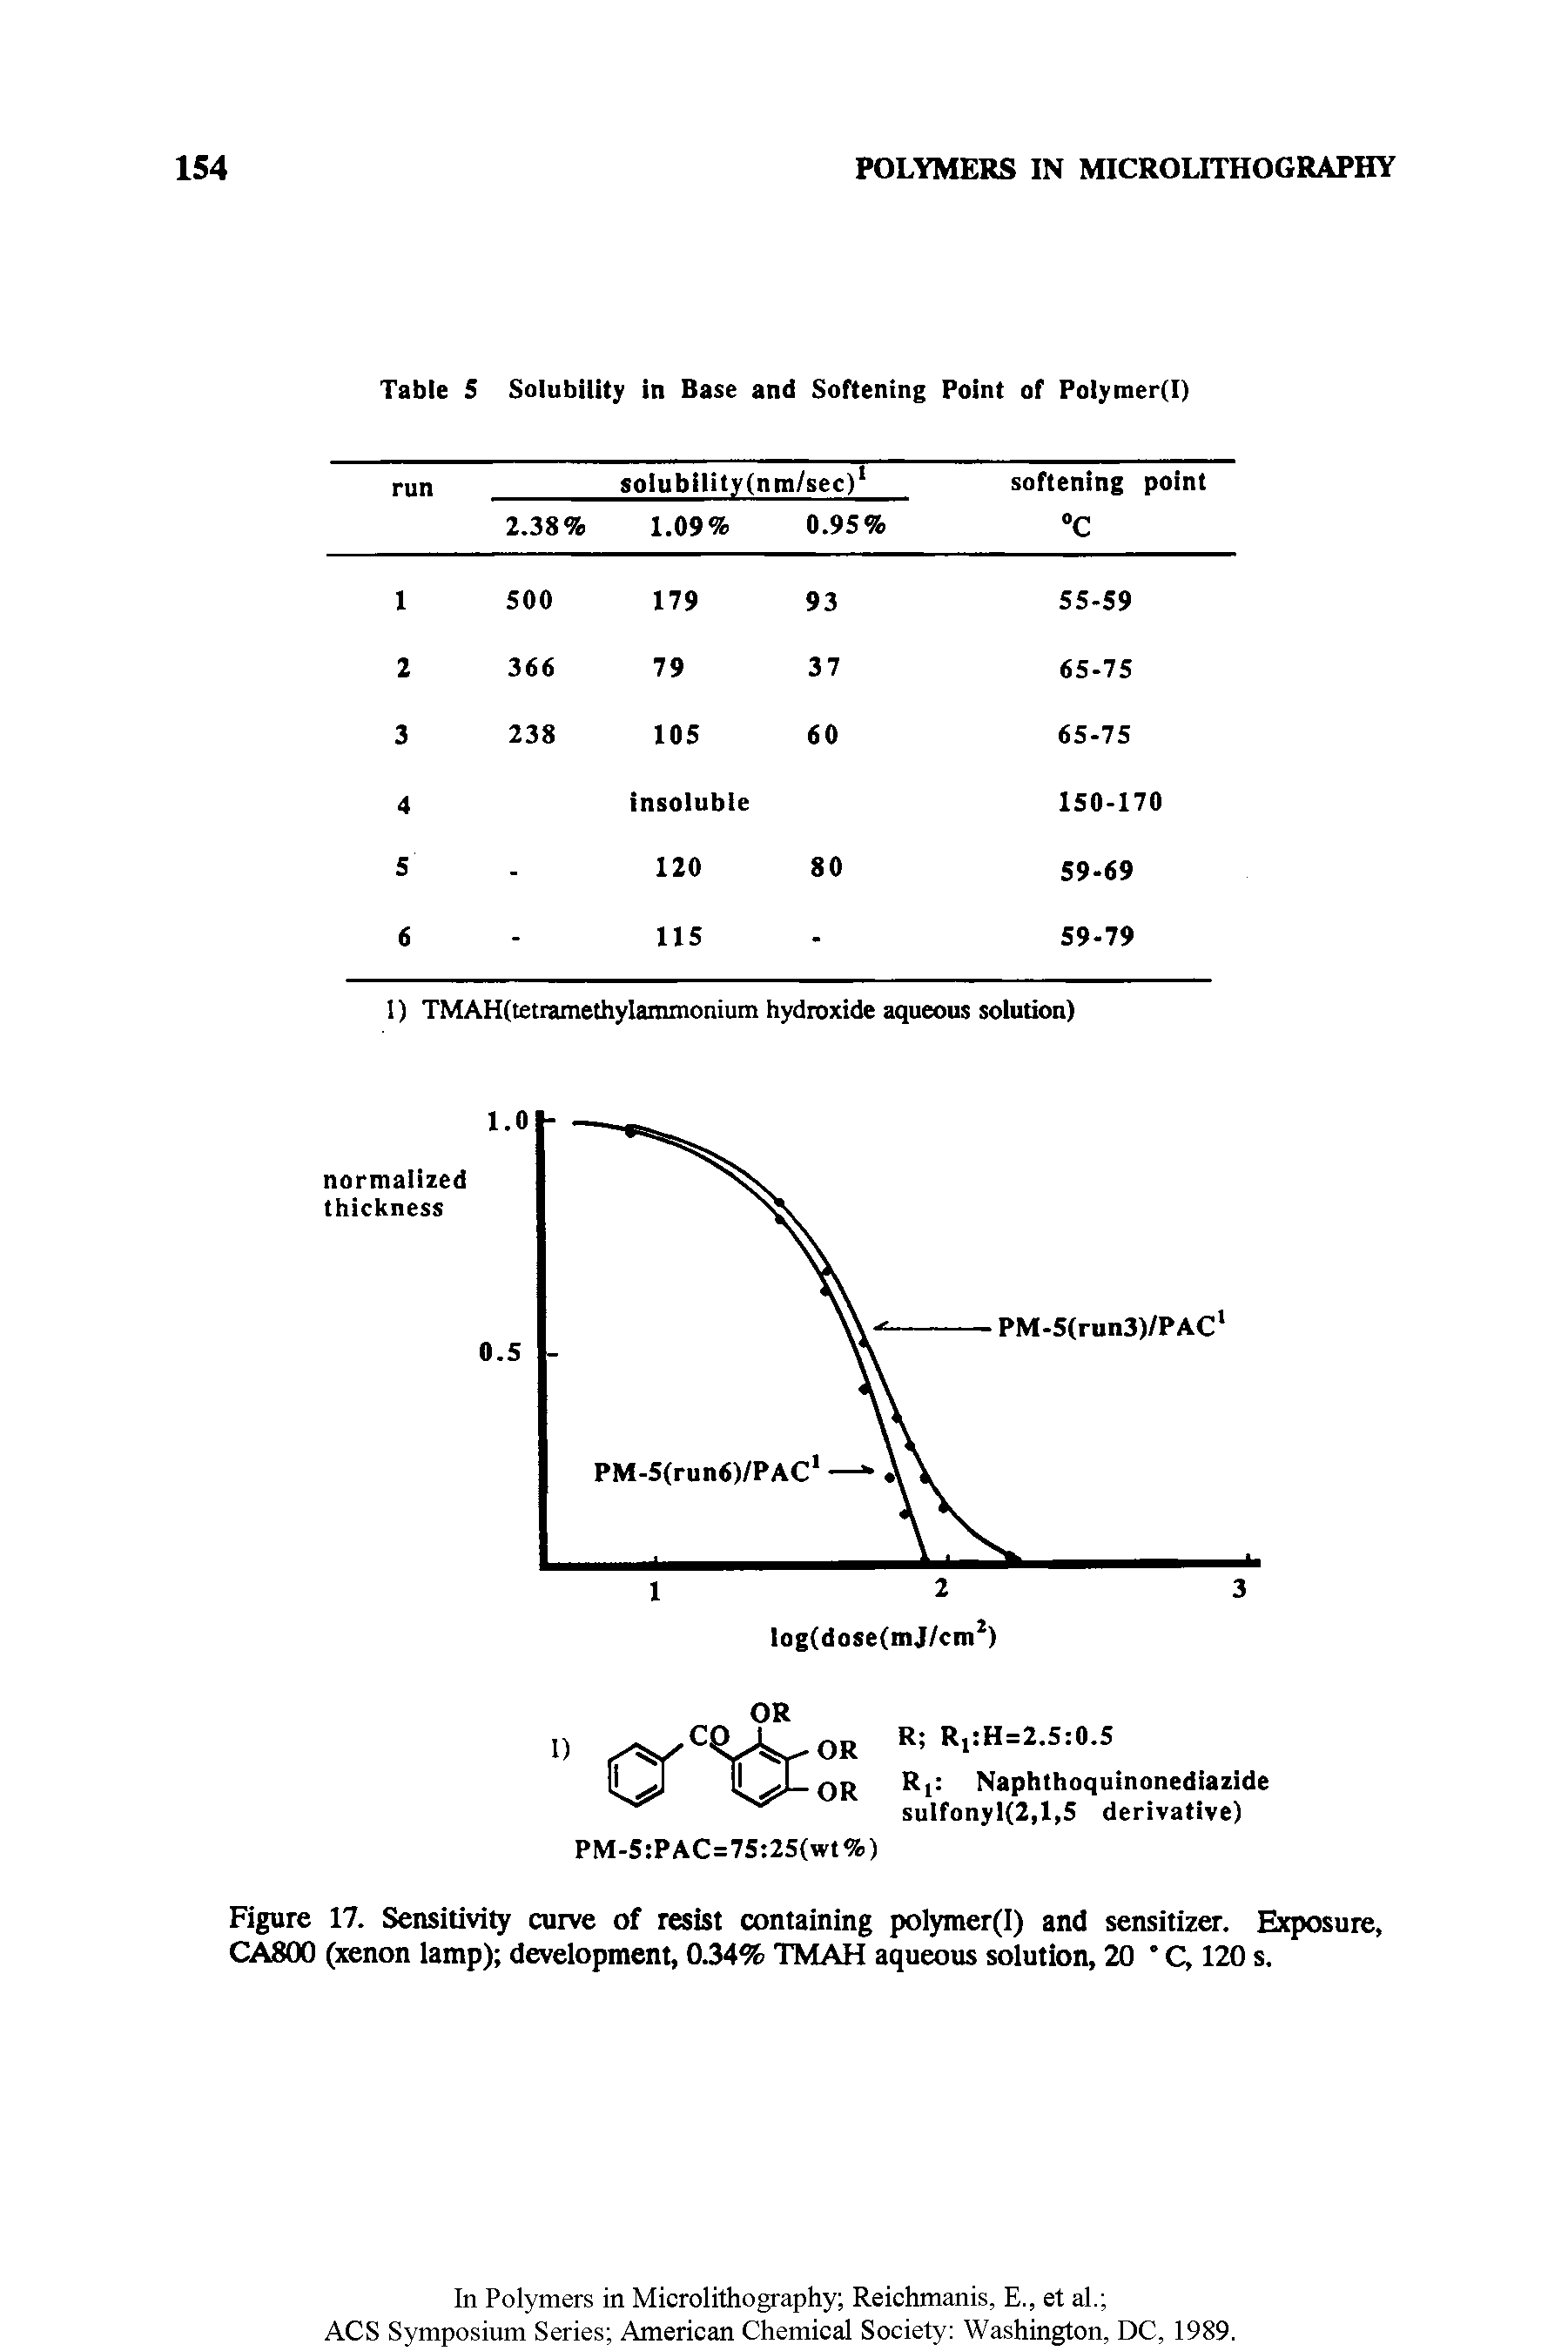 Figure 17. Sensitivity curve of resist containing polymer(I) and sensitizer. Exposure, CA800 (xenon lamp) development, 0.34% TMAH aqueous solution, 20 C, 120 s.